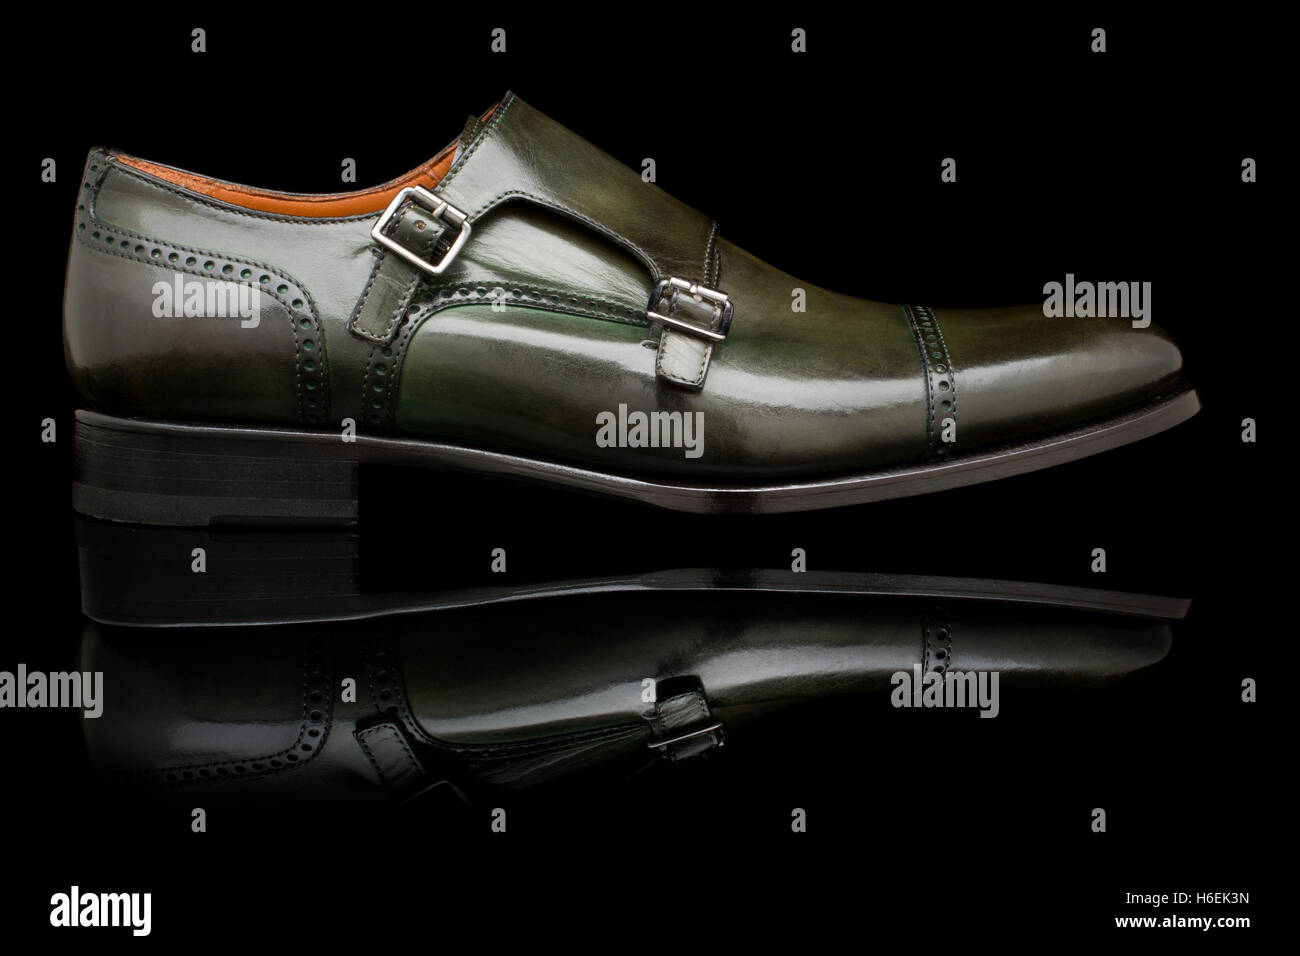 Italian handmade craft leather shoes. Italy Europe Stock Photo - Alamy